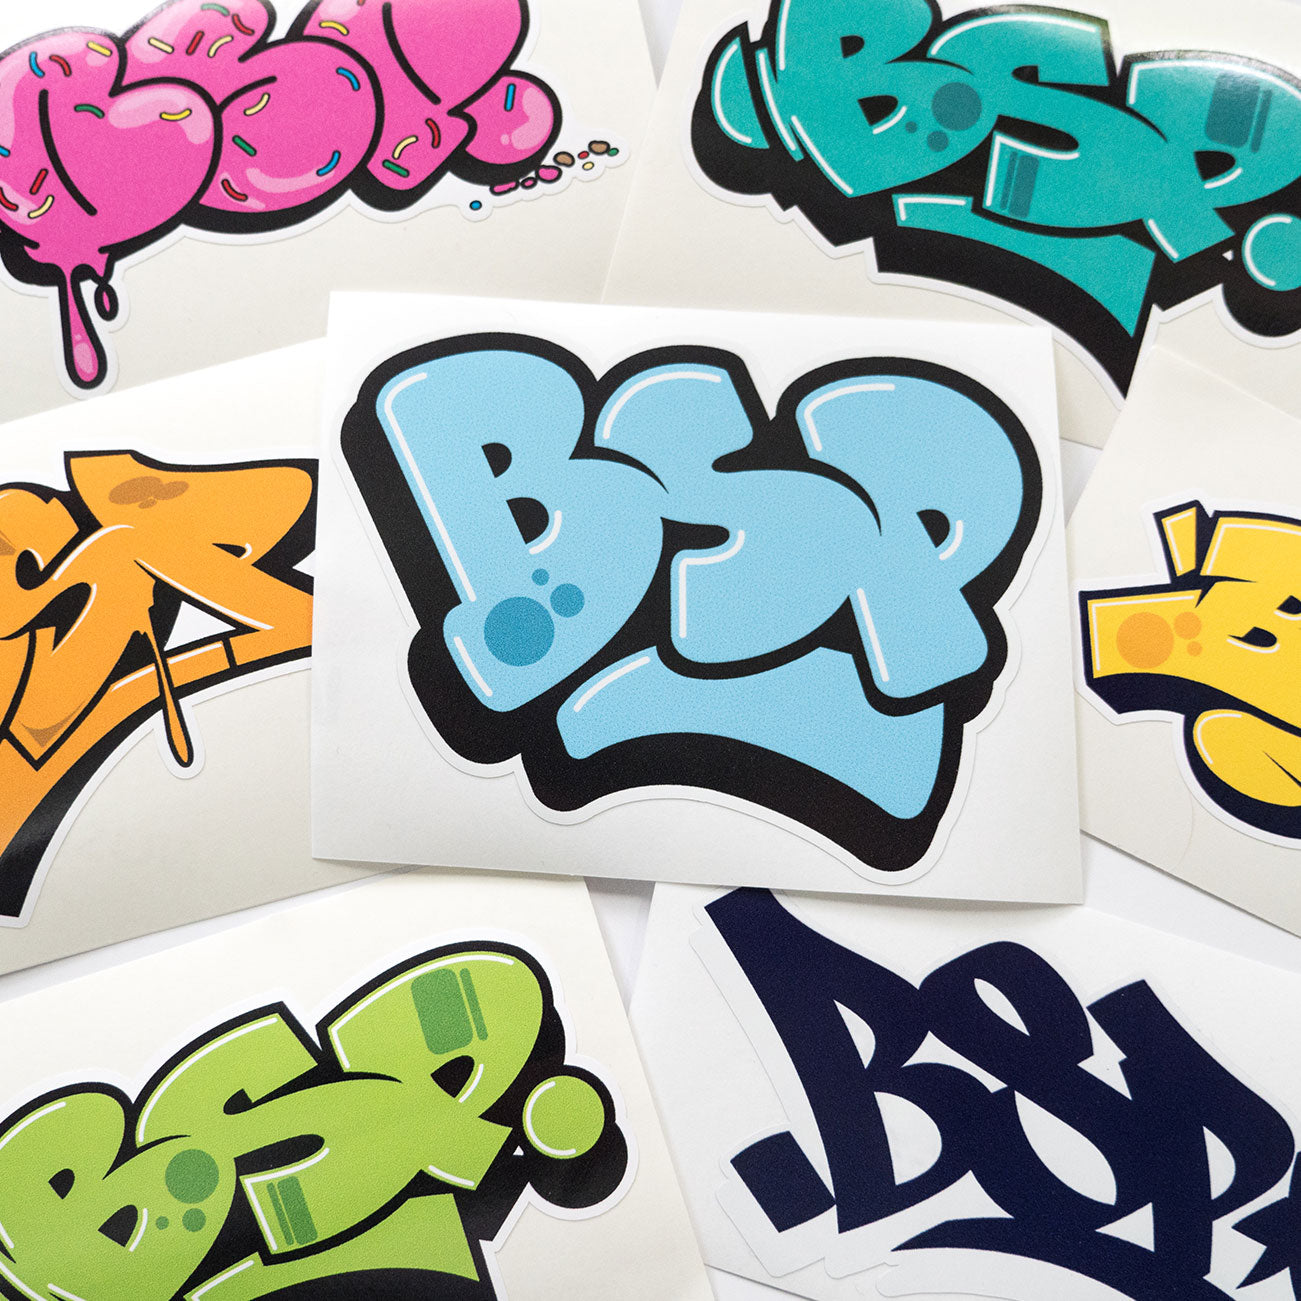 BSP Mixed Graffiti Stickers